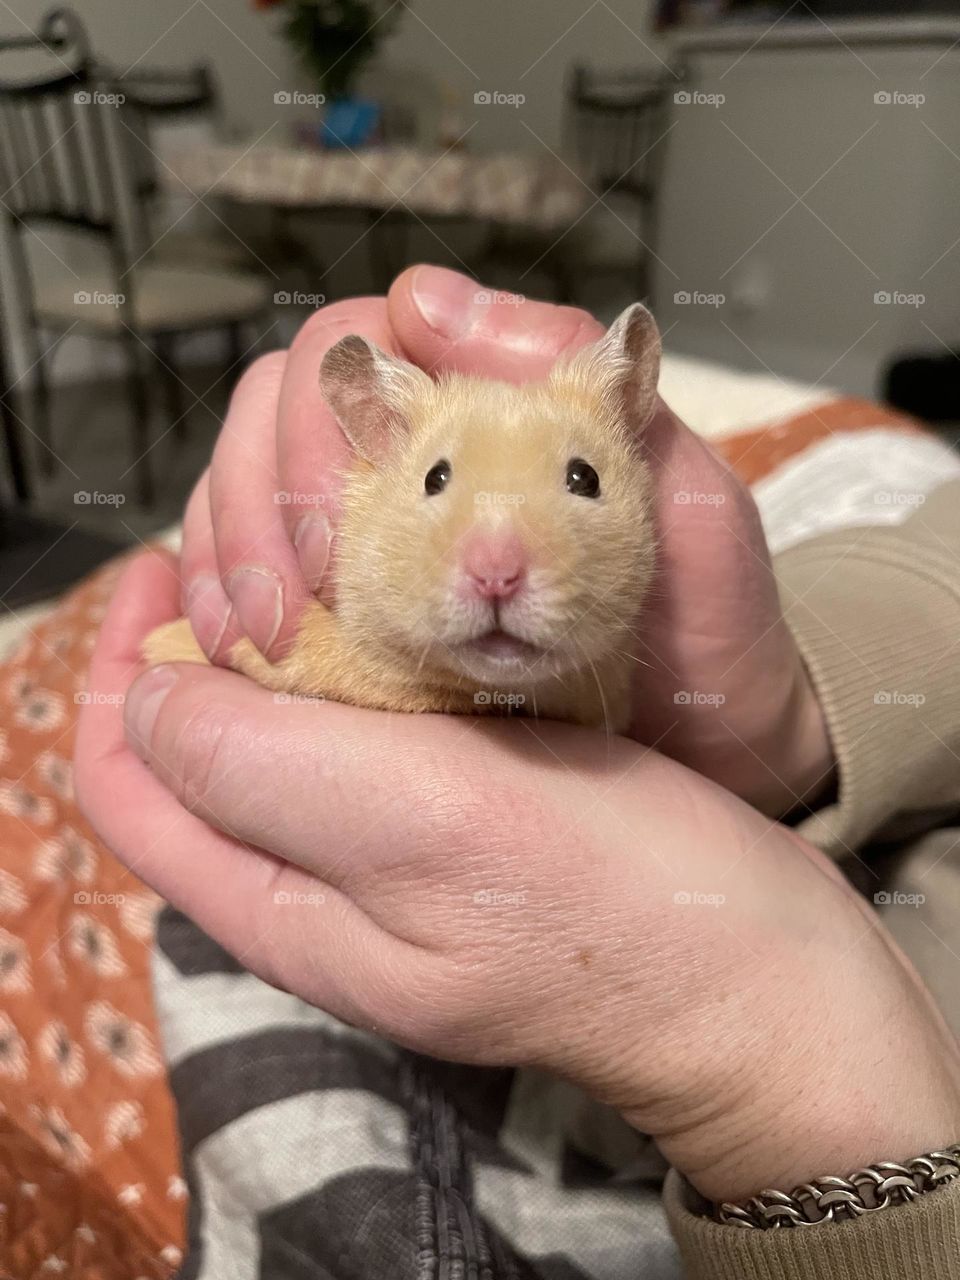 Cute hamster in man’s hands